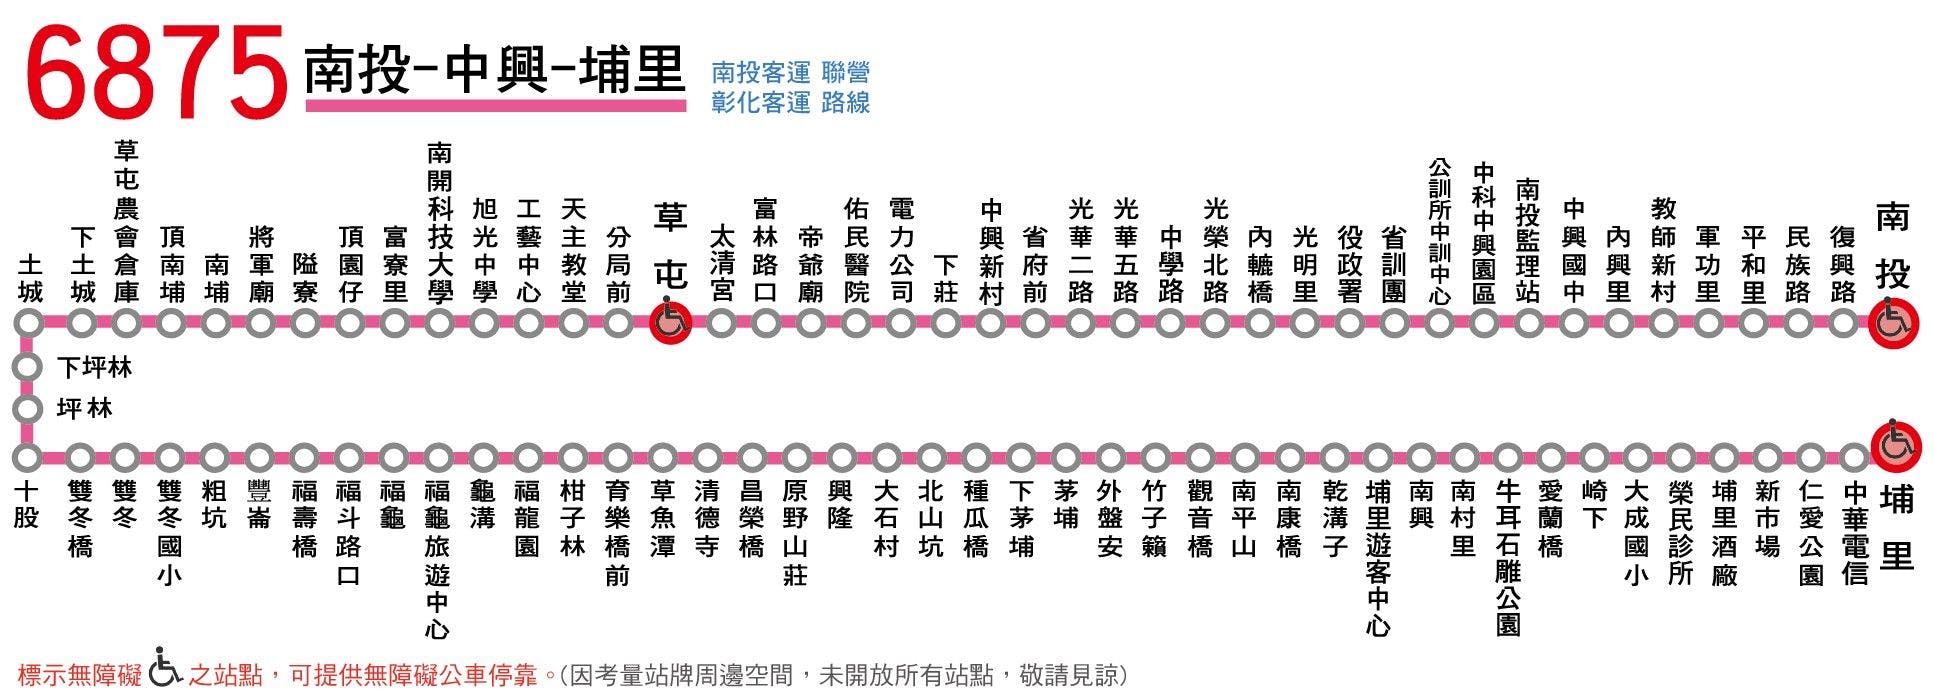 6875Route Map-Chang Hua Bus